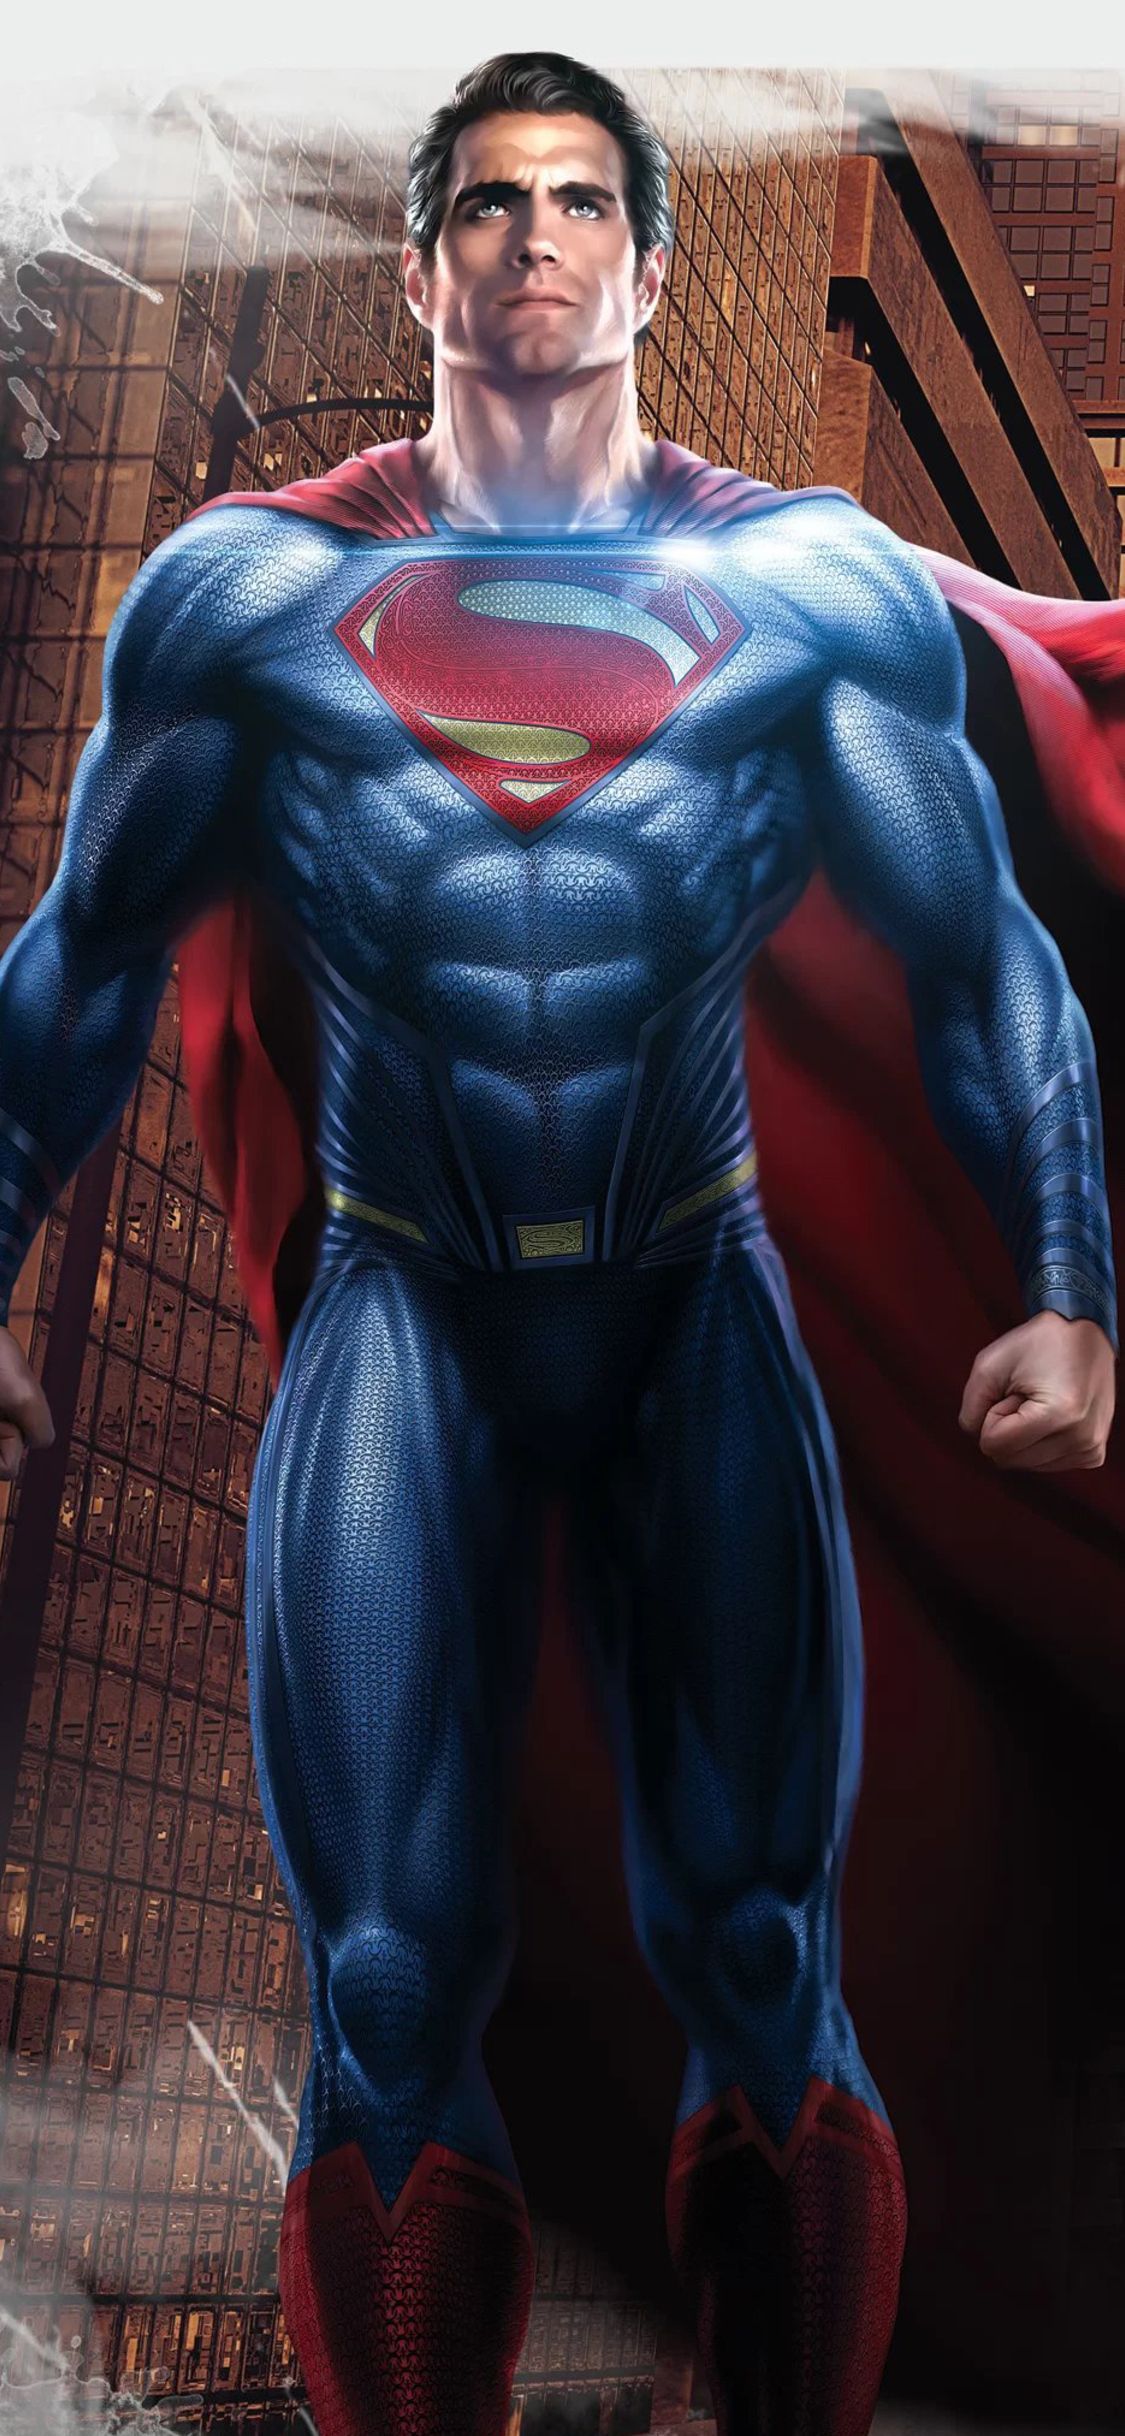 Superman Man Of Steel 4k iPhone XS, iPhone iPhone X HD 4k Wallpaper, Image, Back. Superman HD wallpaper, Superman wallpaper, Superman wallpaper logo